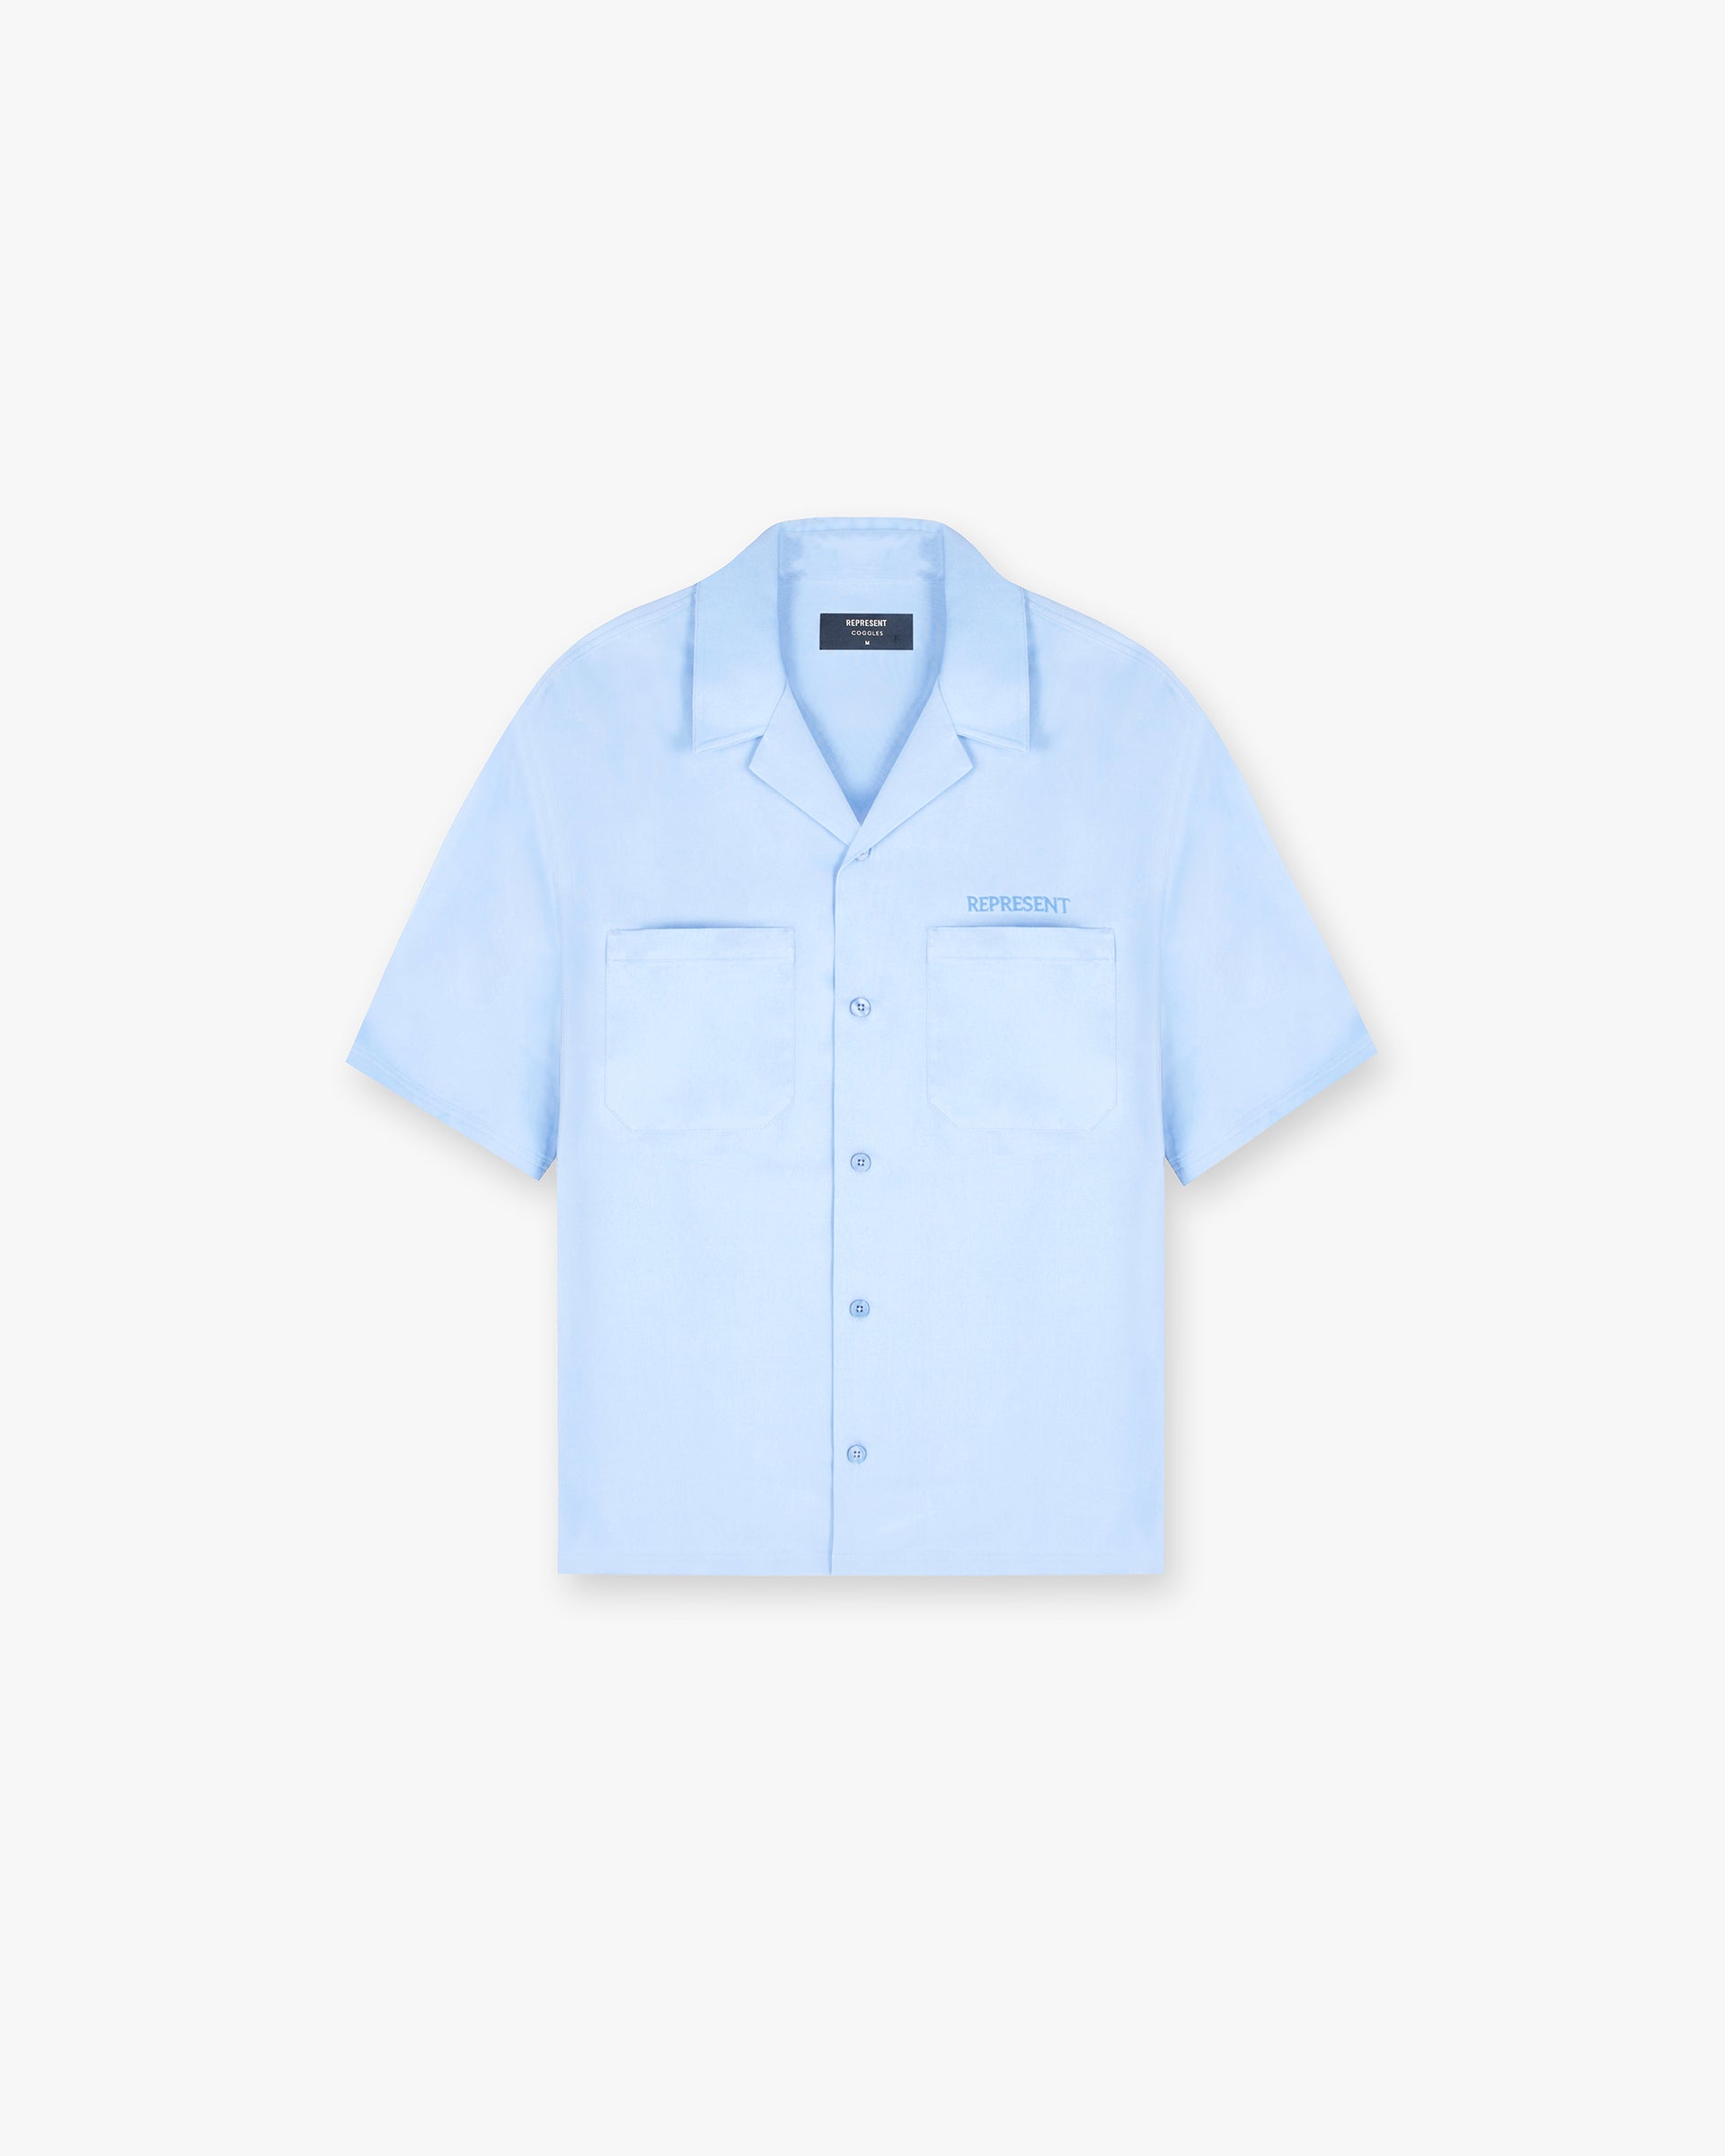 Bowling Shirt - Vista Blue